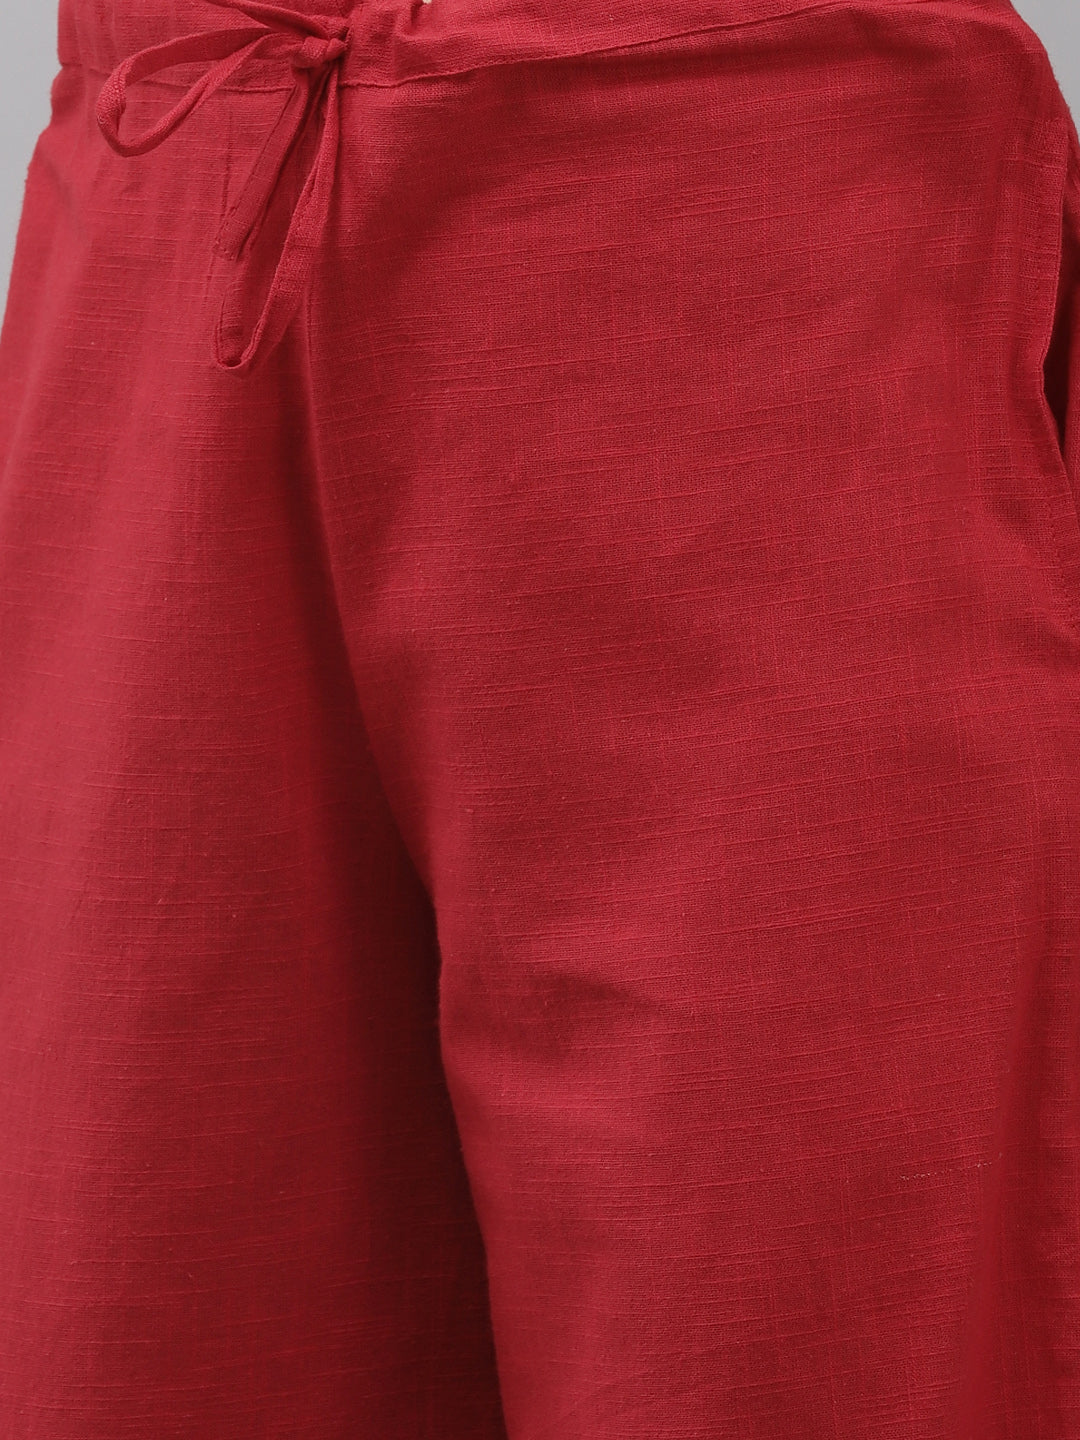 Ishin Women's Cotton Red Embroidered A-Line Kurta Salwar Set